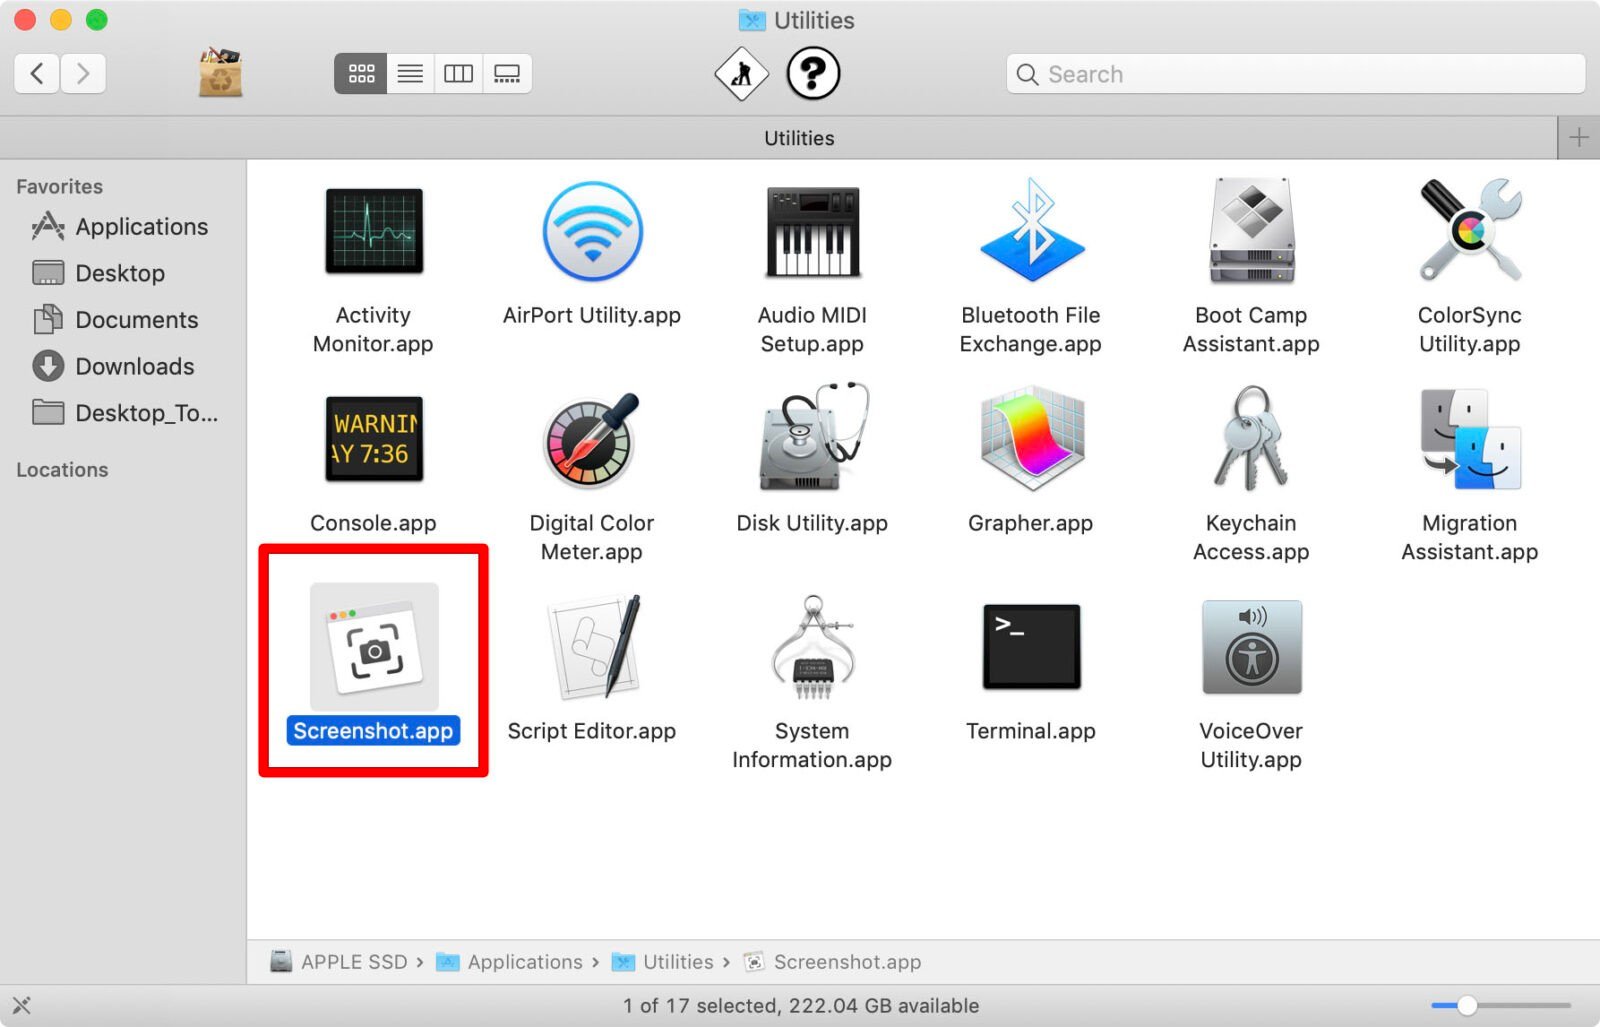 mac screenshot auto save